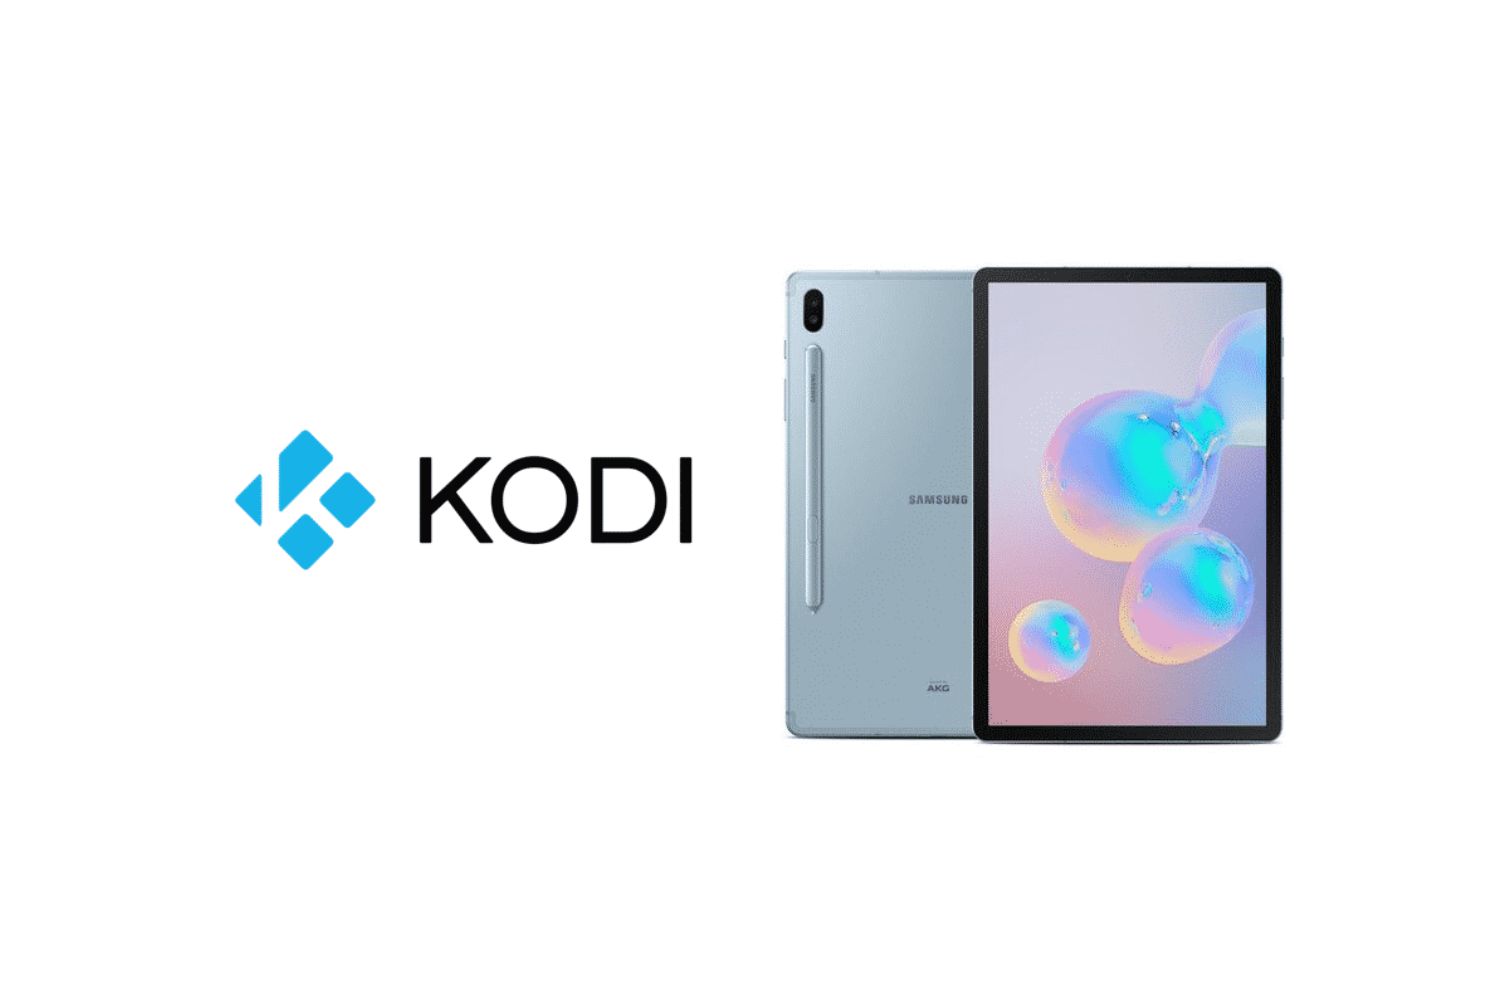 How To Install Kodi On Samsung Tablet